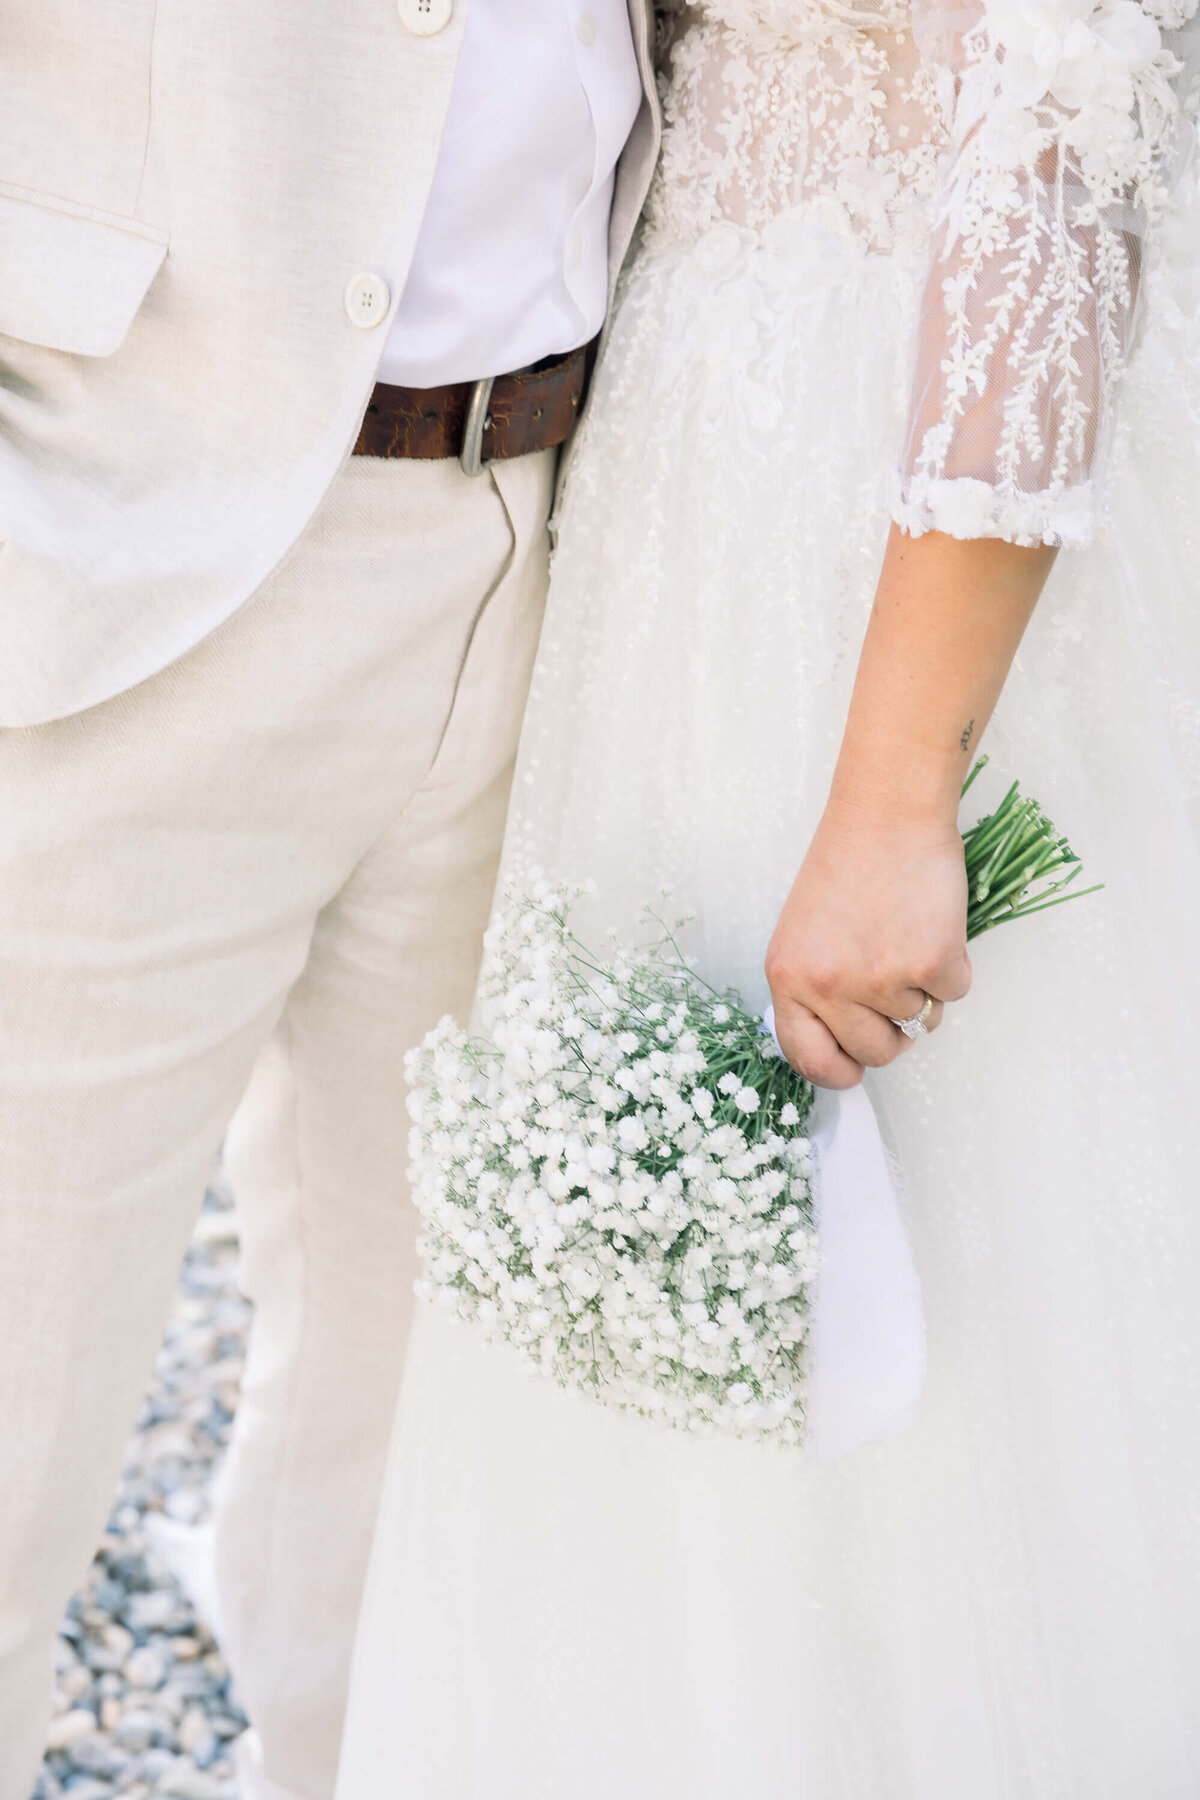 Victoria Engelen Flowers - A White Wedding in a French Chateau - JoannaandMattWedding_DariaLormanPhotography-607